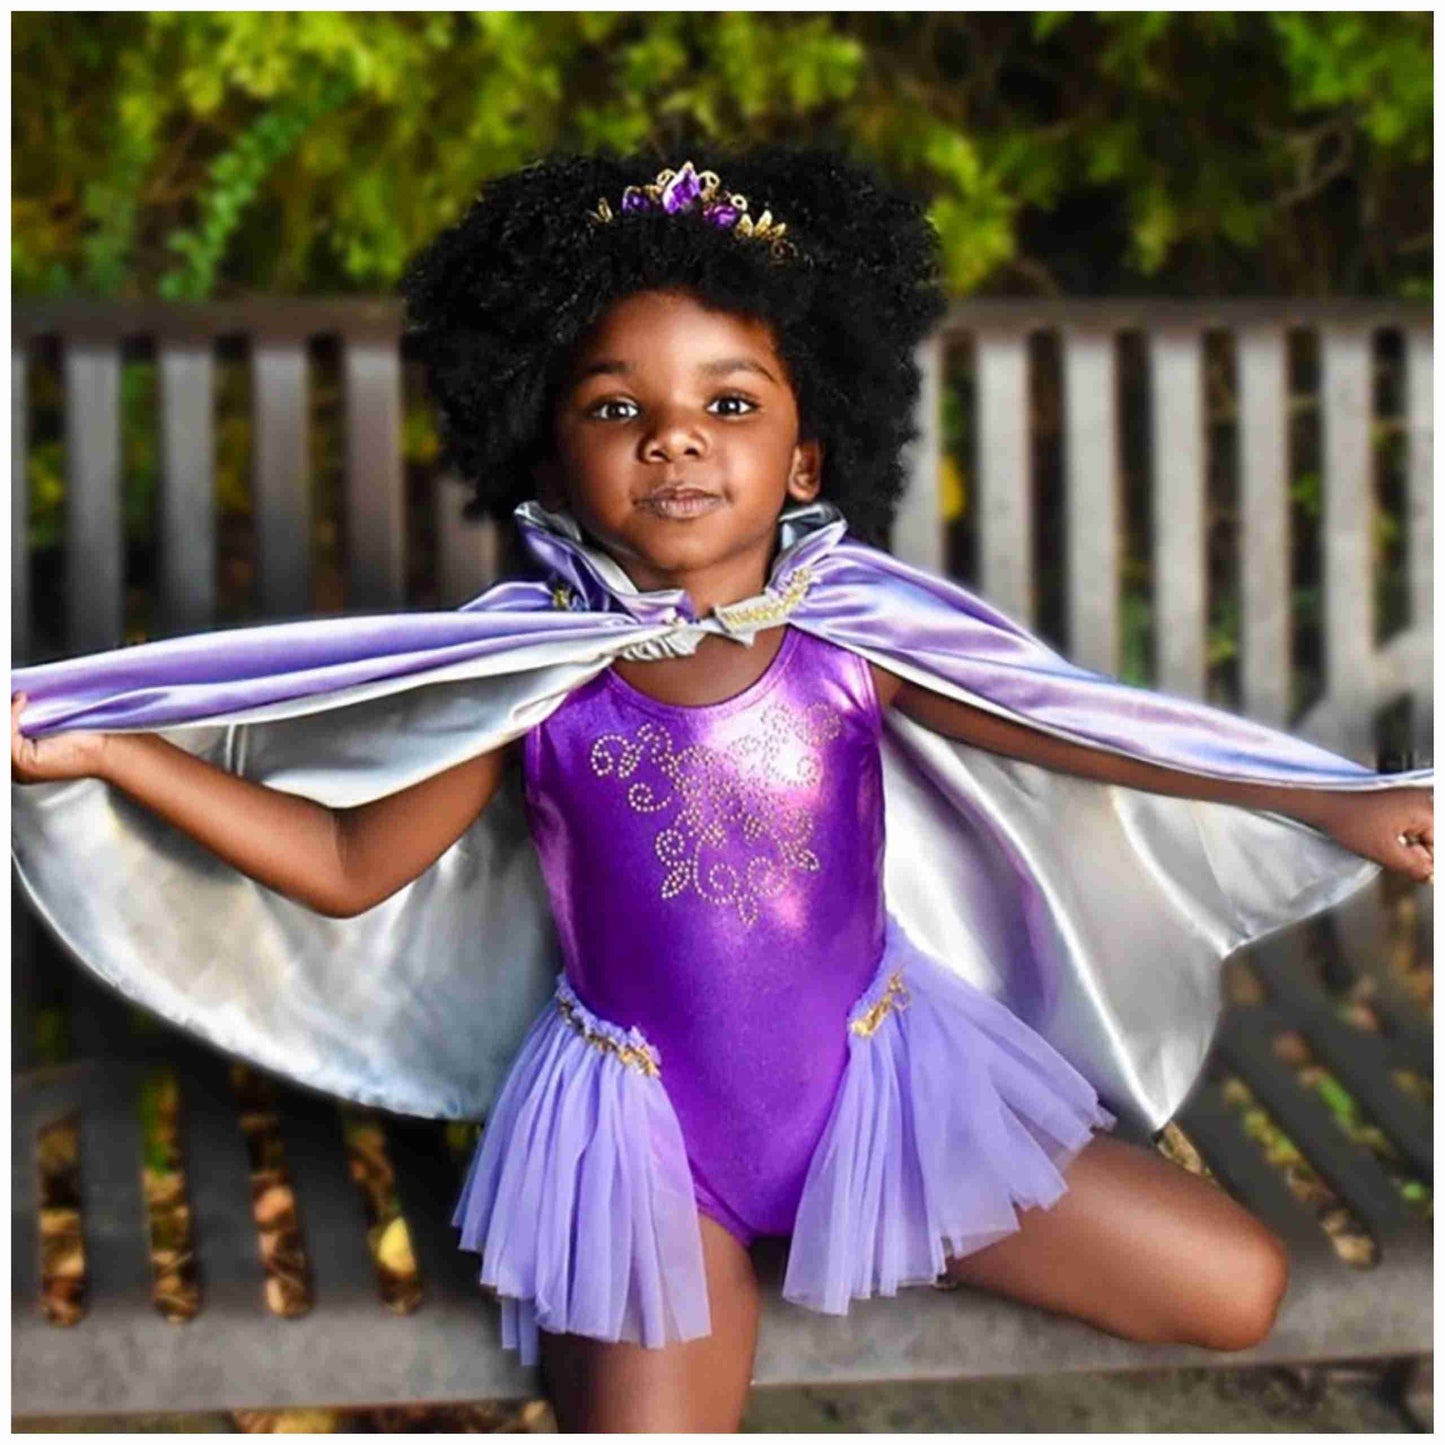 a little girl dressed in a purple leotard